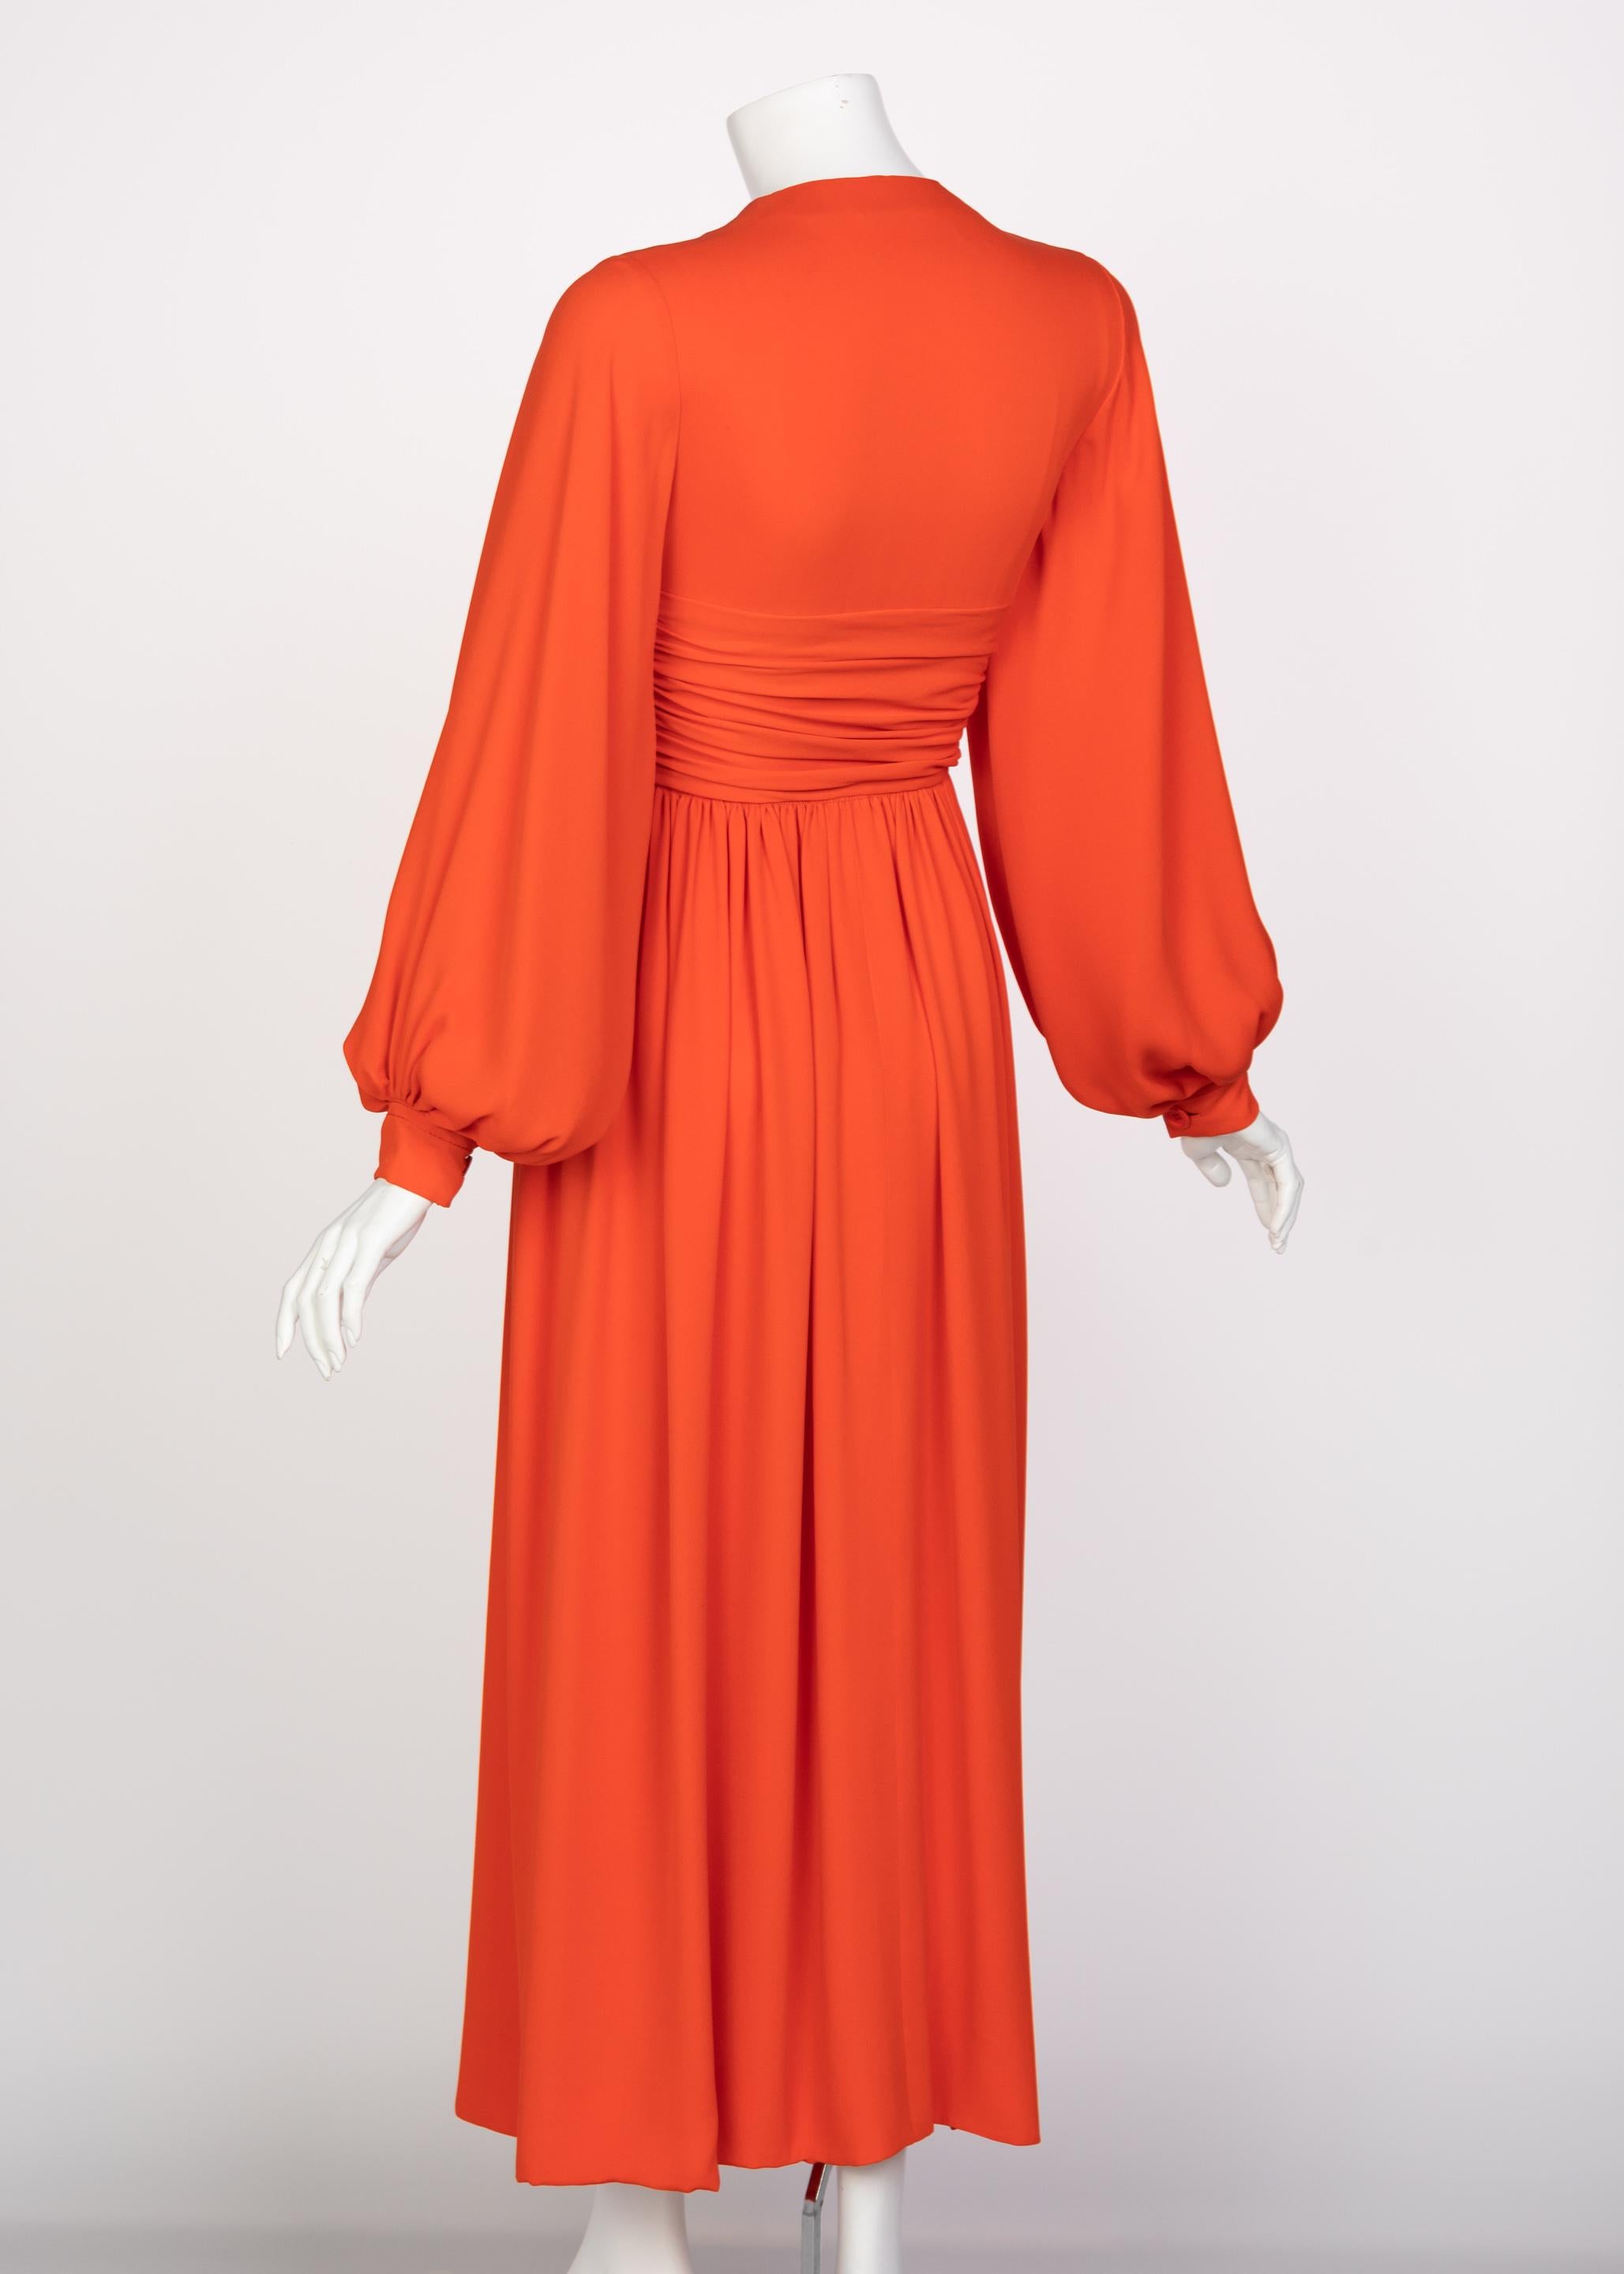 Galanos Orange Silk Plunge Neck Bishop Sleeve Dress, 1970s In Excellent Condition For Sale In Boca Raton, FL